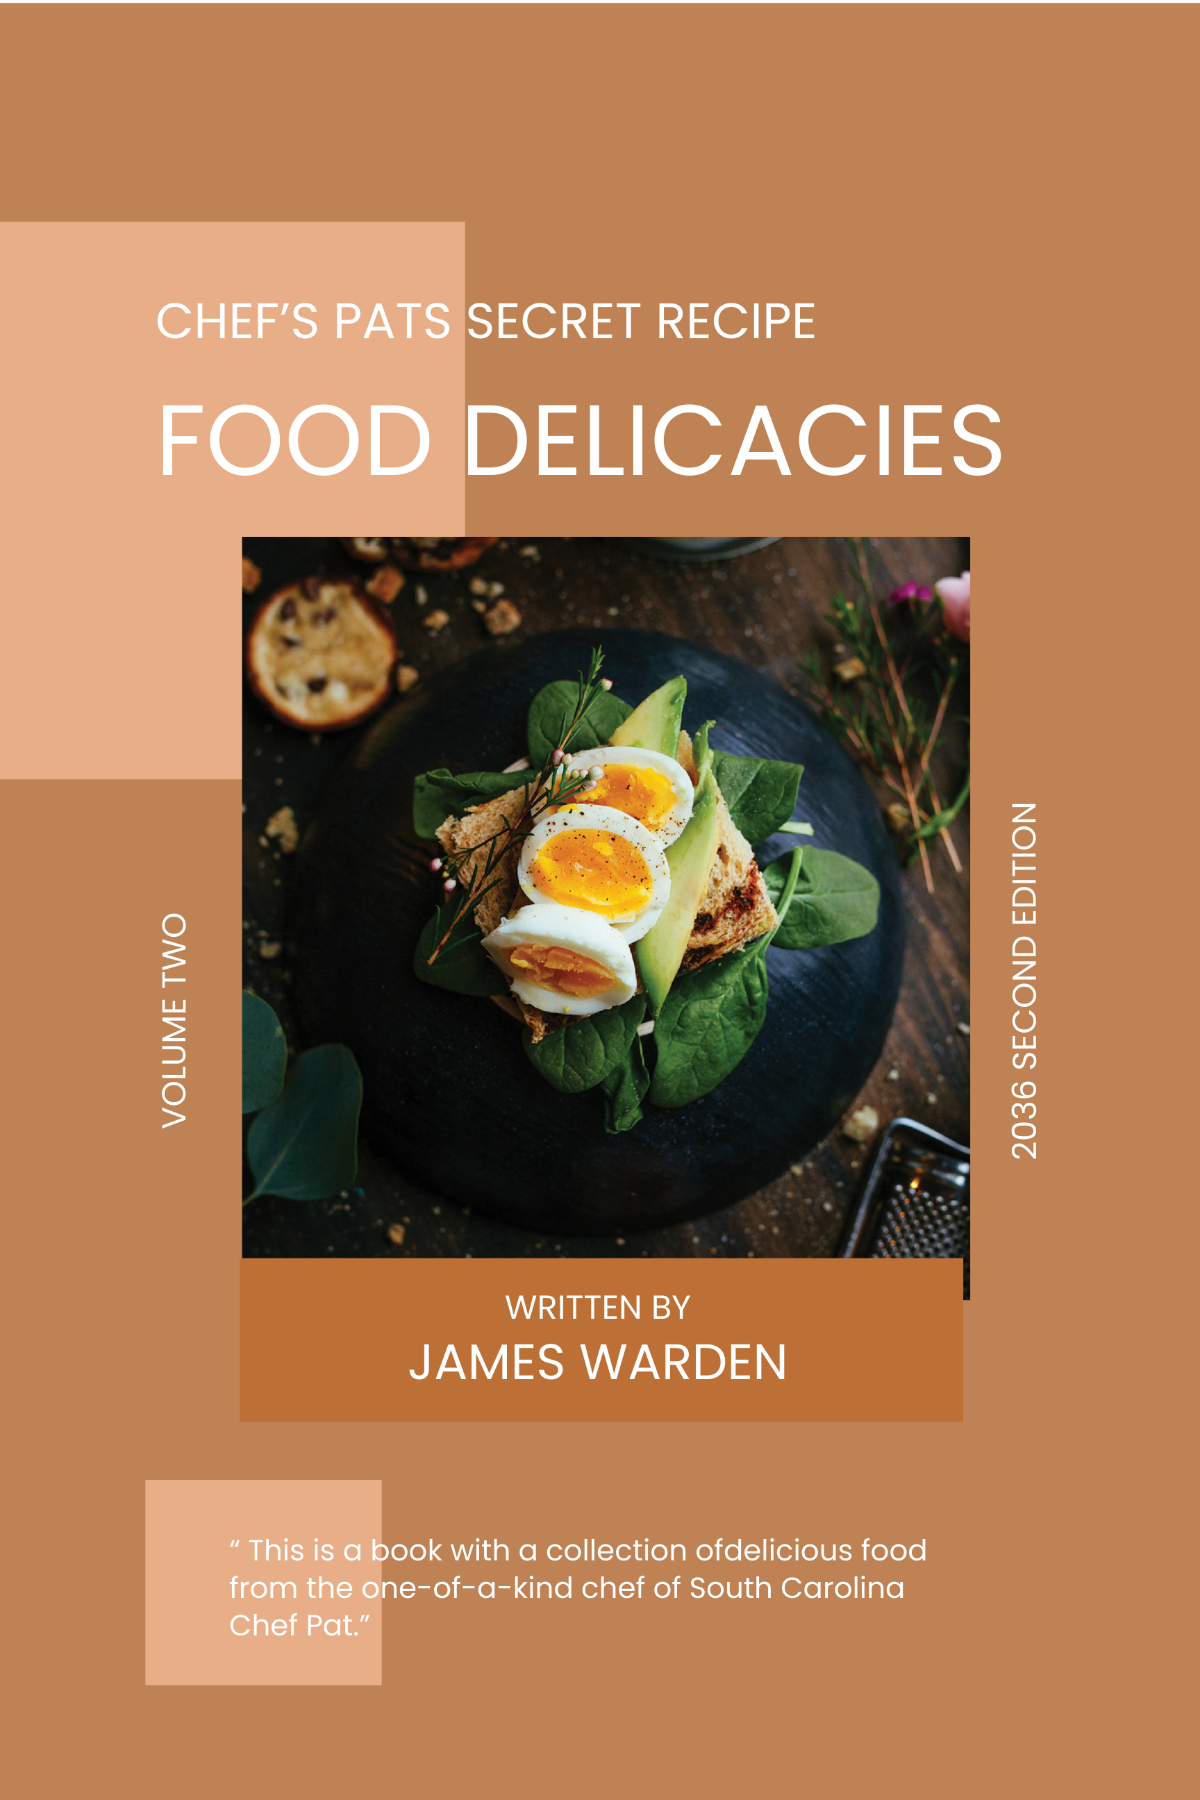 Cookbook Book Cover Template